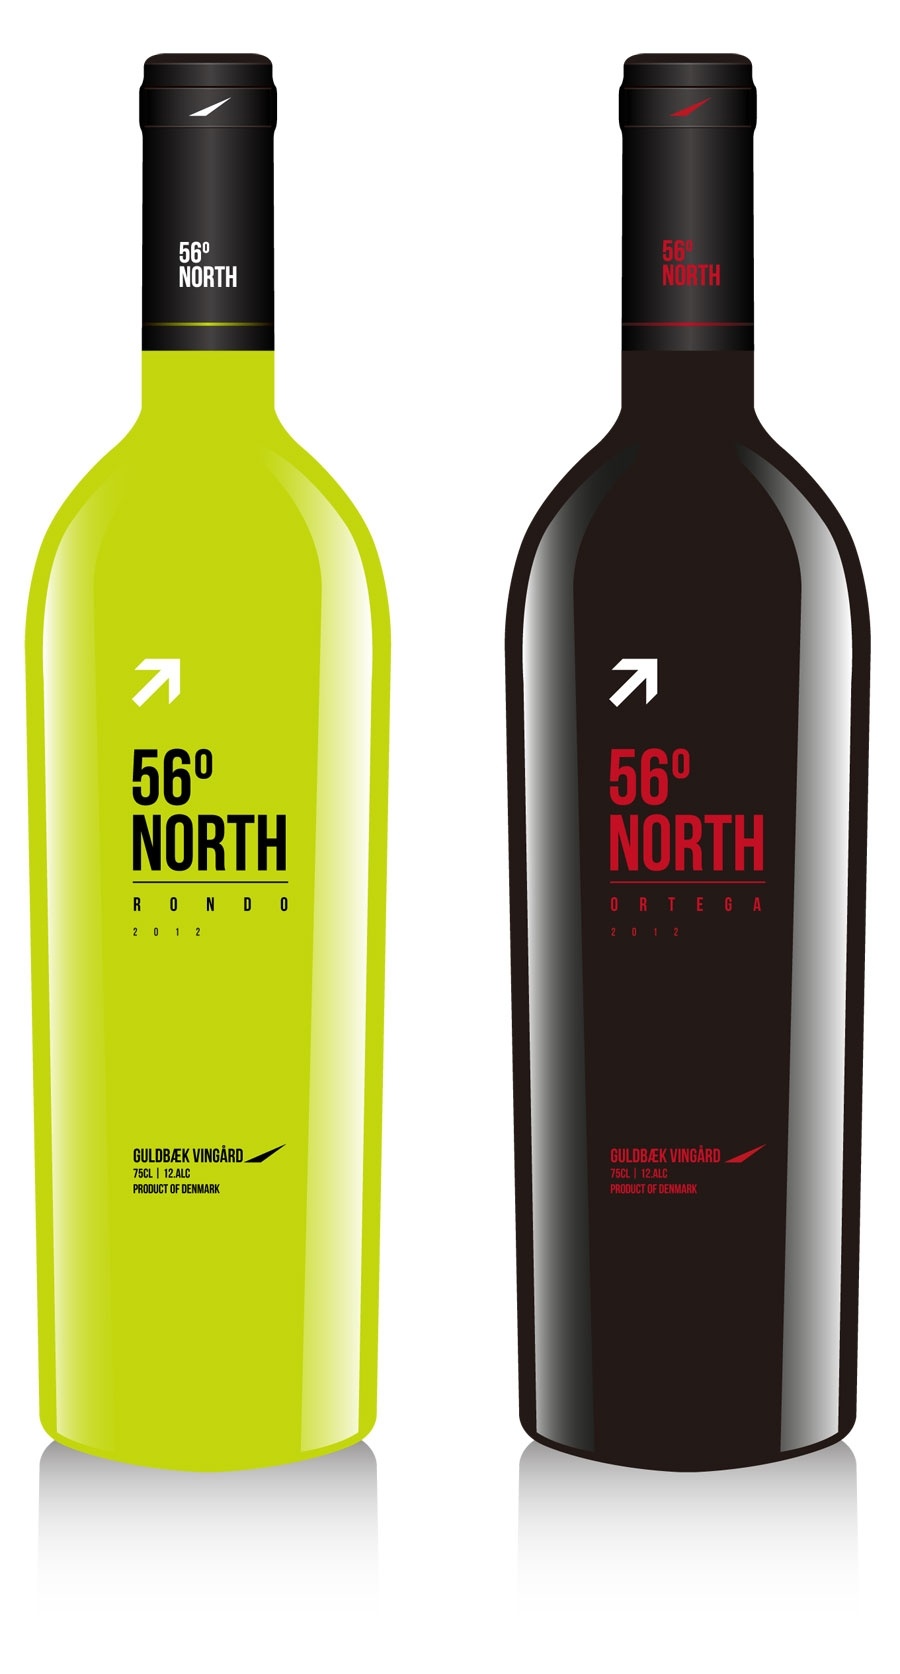 56 North wine